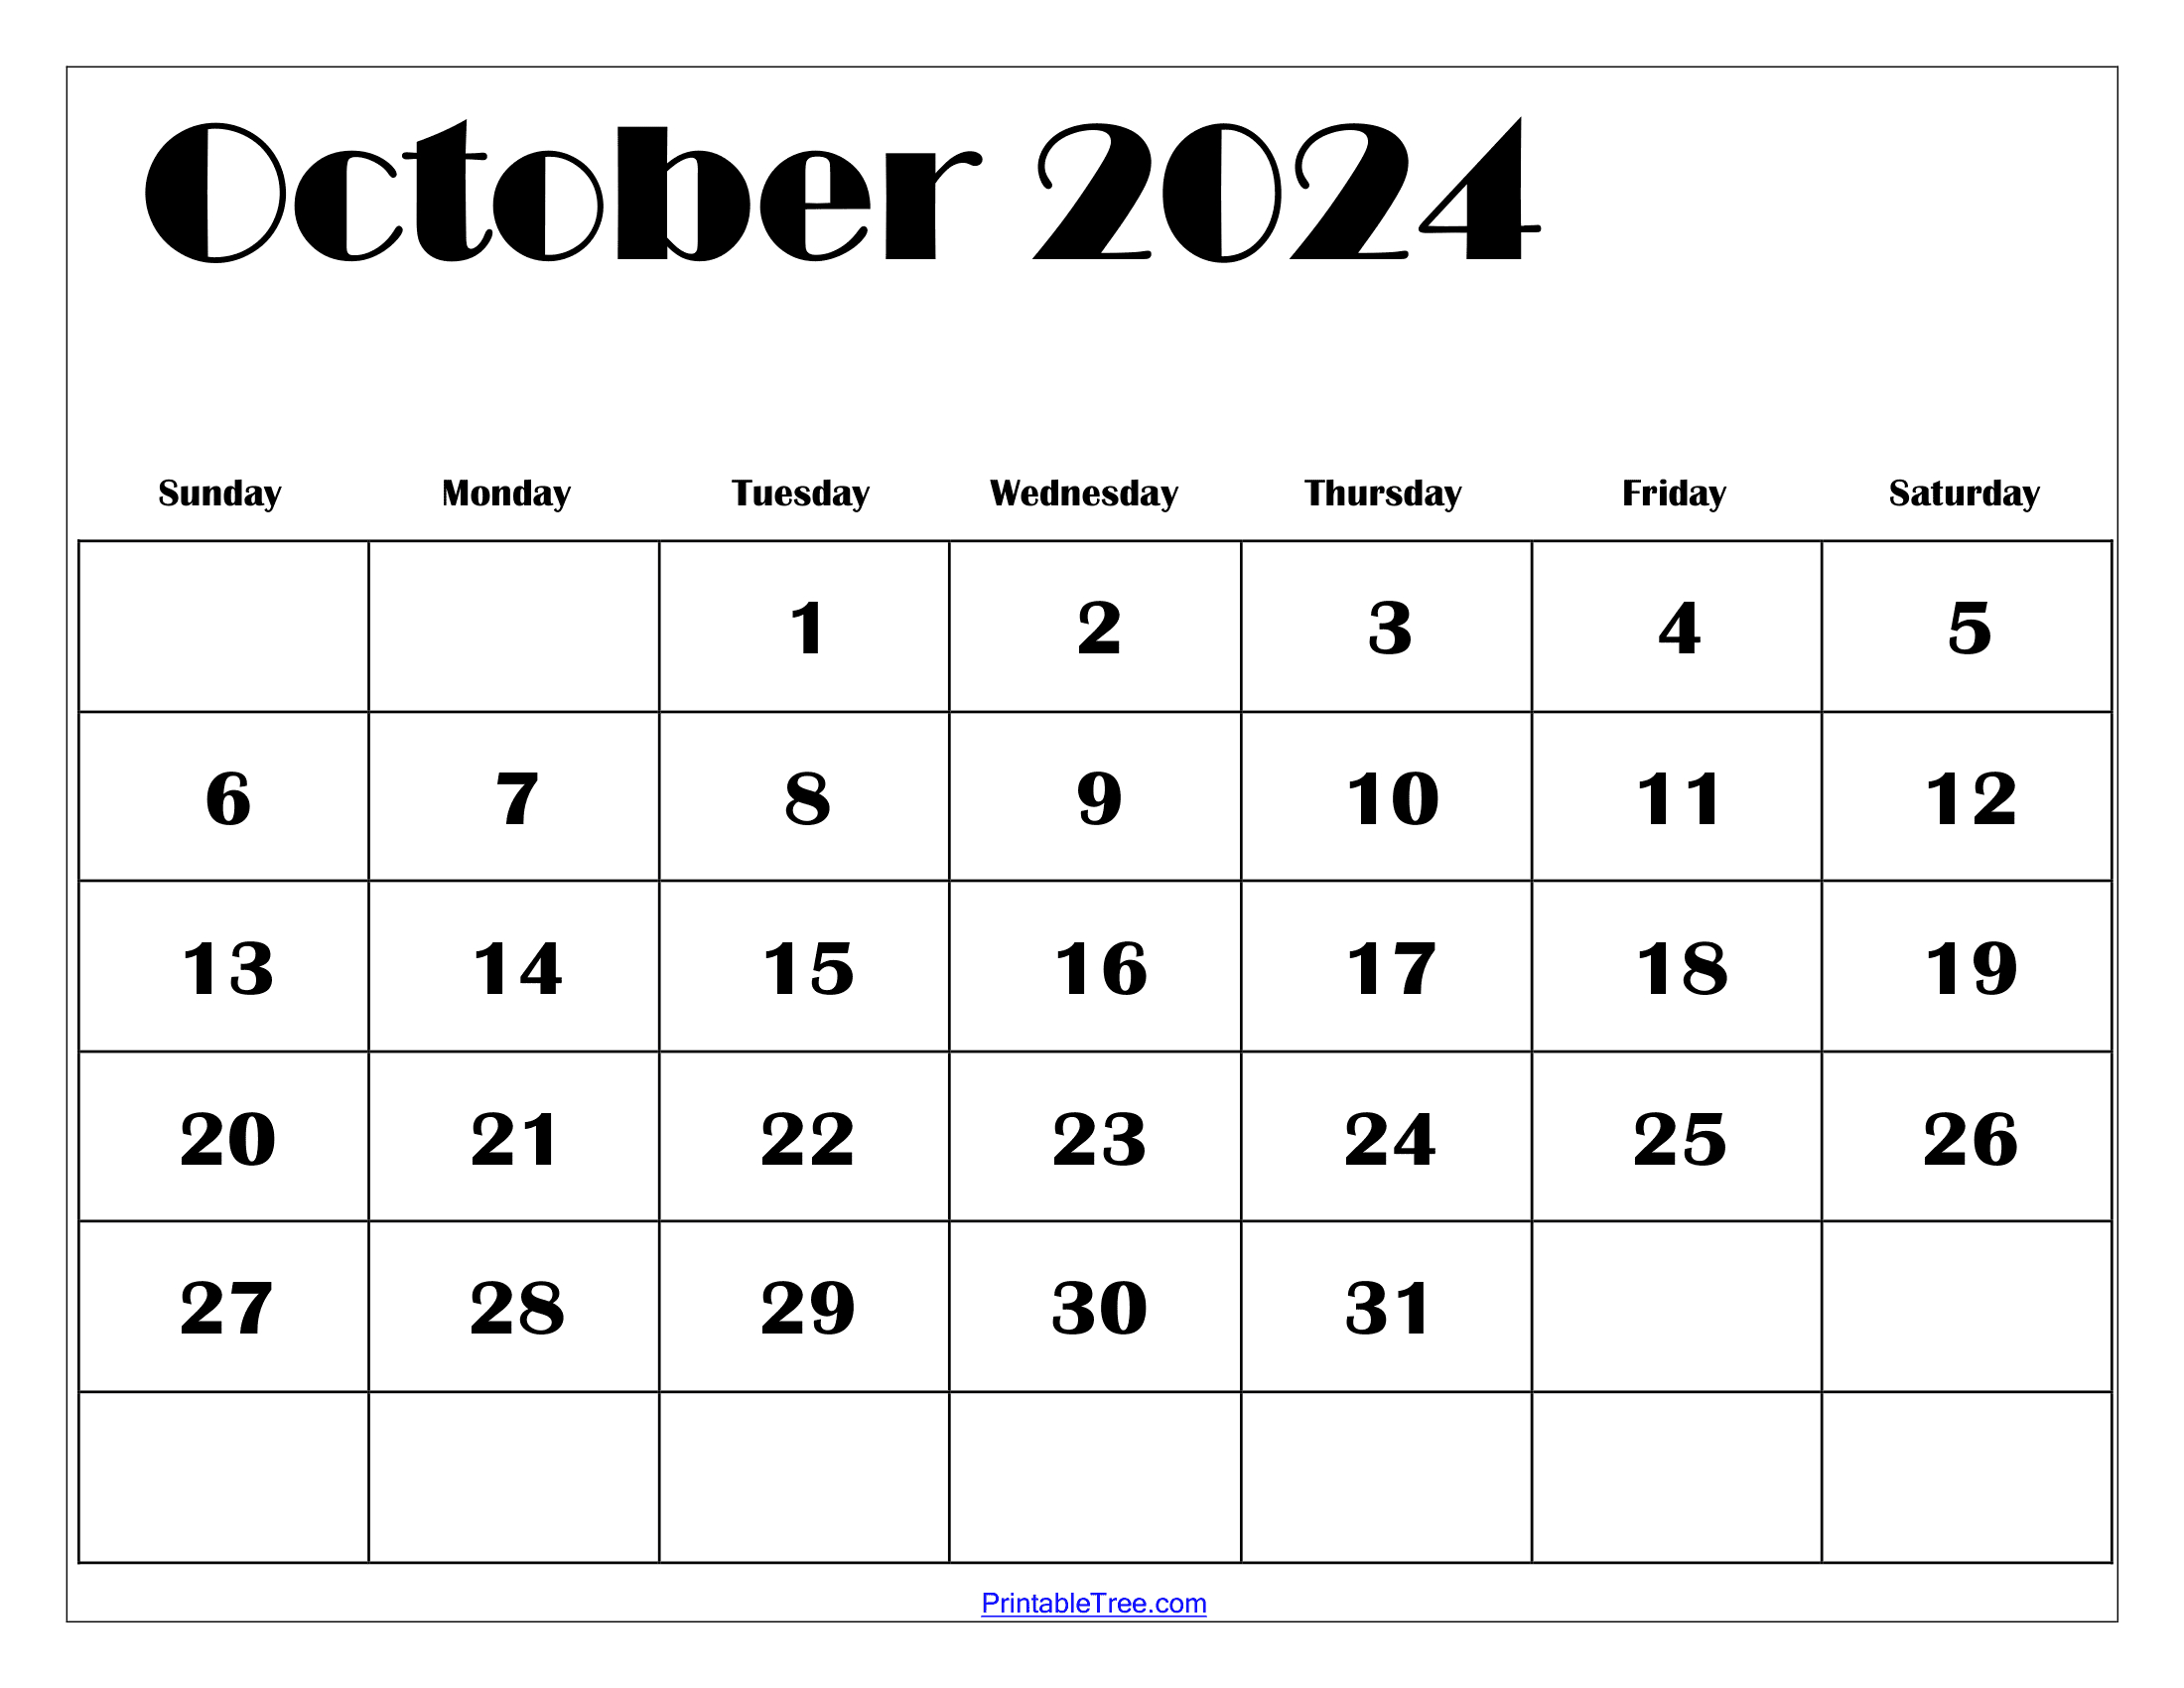 October 2024 Calendar Printable Pdf Free Templates With Holidays | Free Printable Calendar October 2024